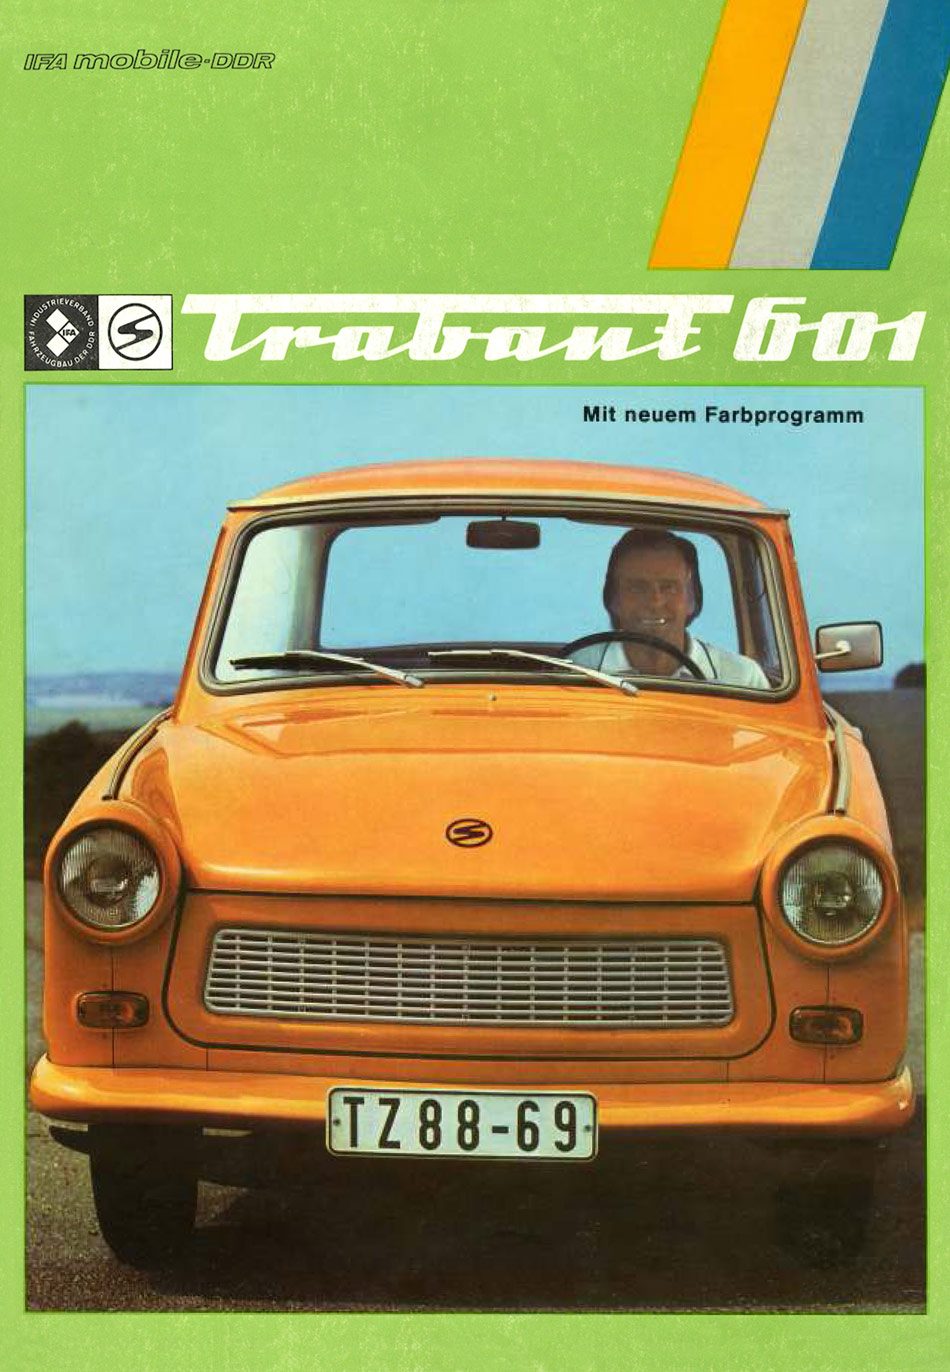 1976 - Trabant 601 - Seite 1